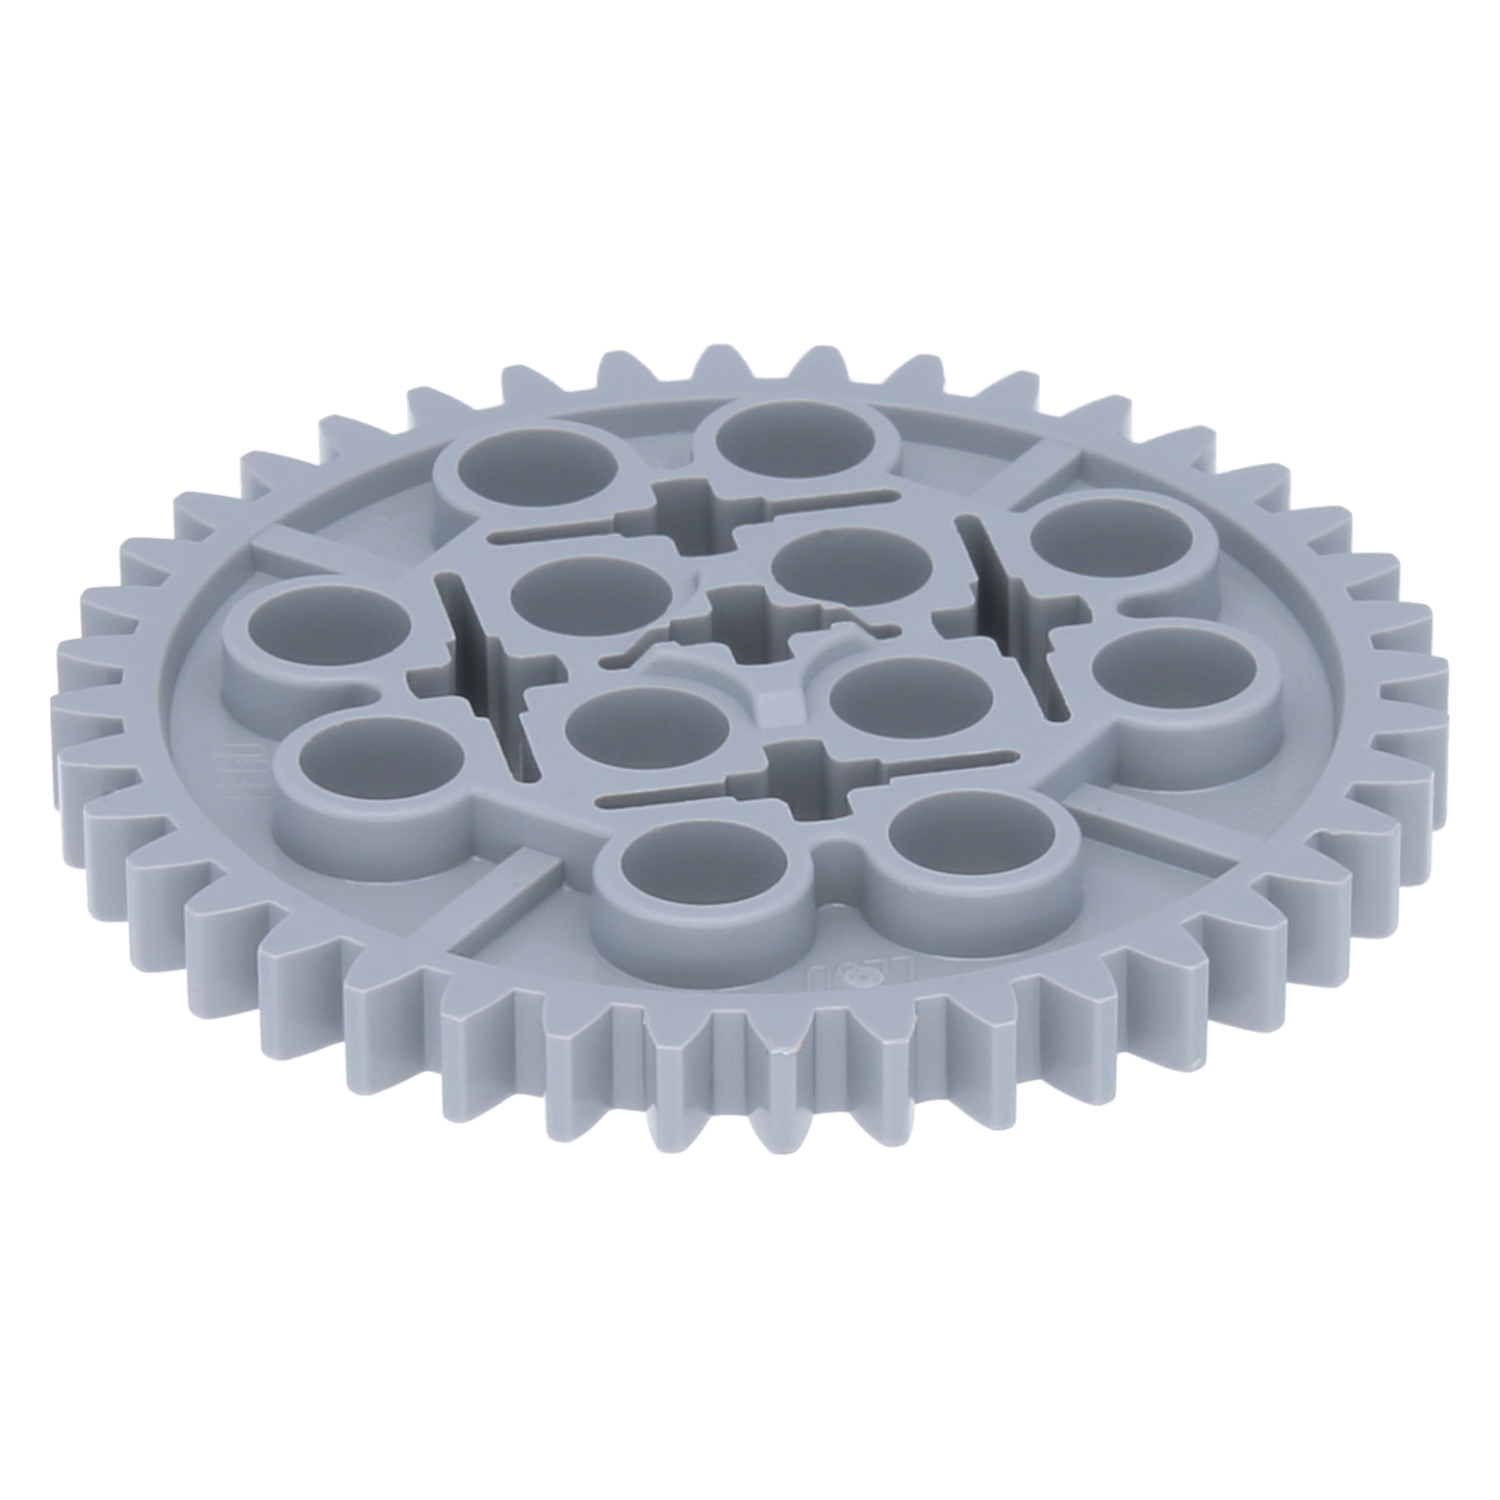 LEGO Technic gears - 40 -toothy